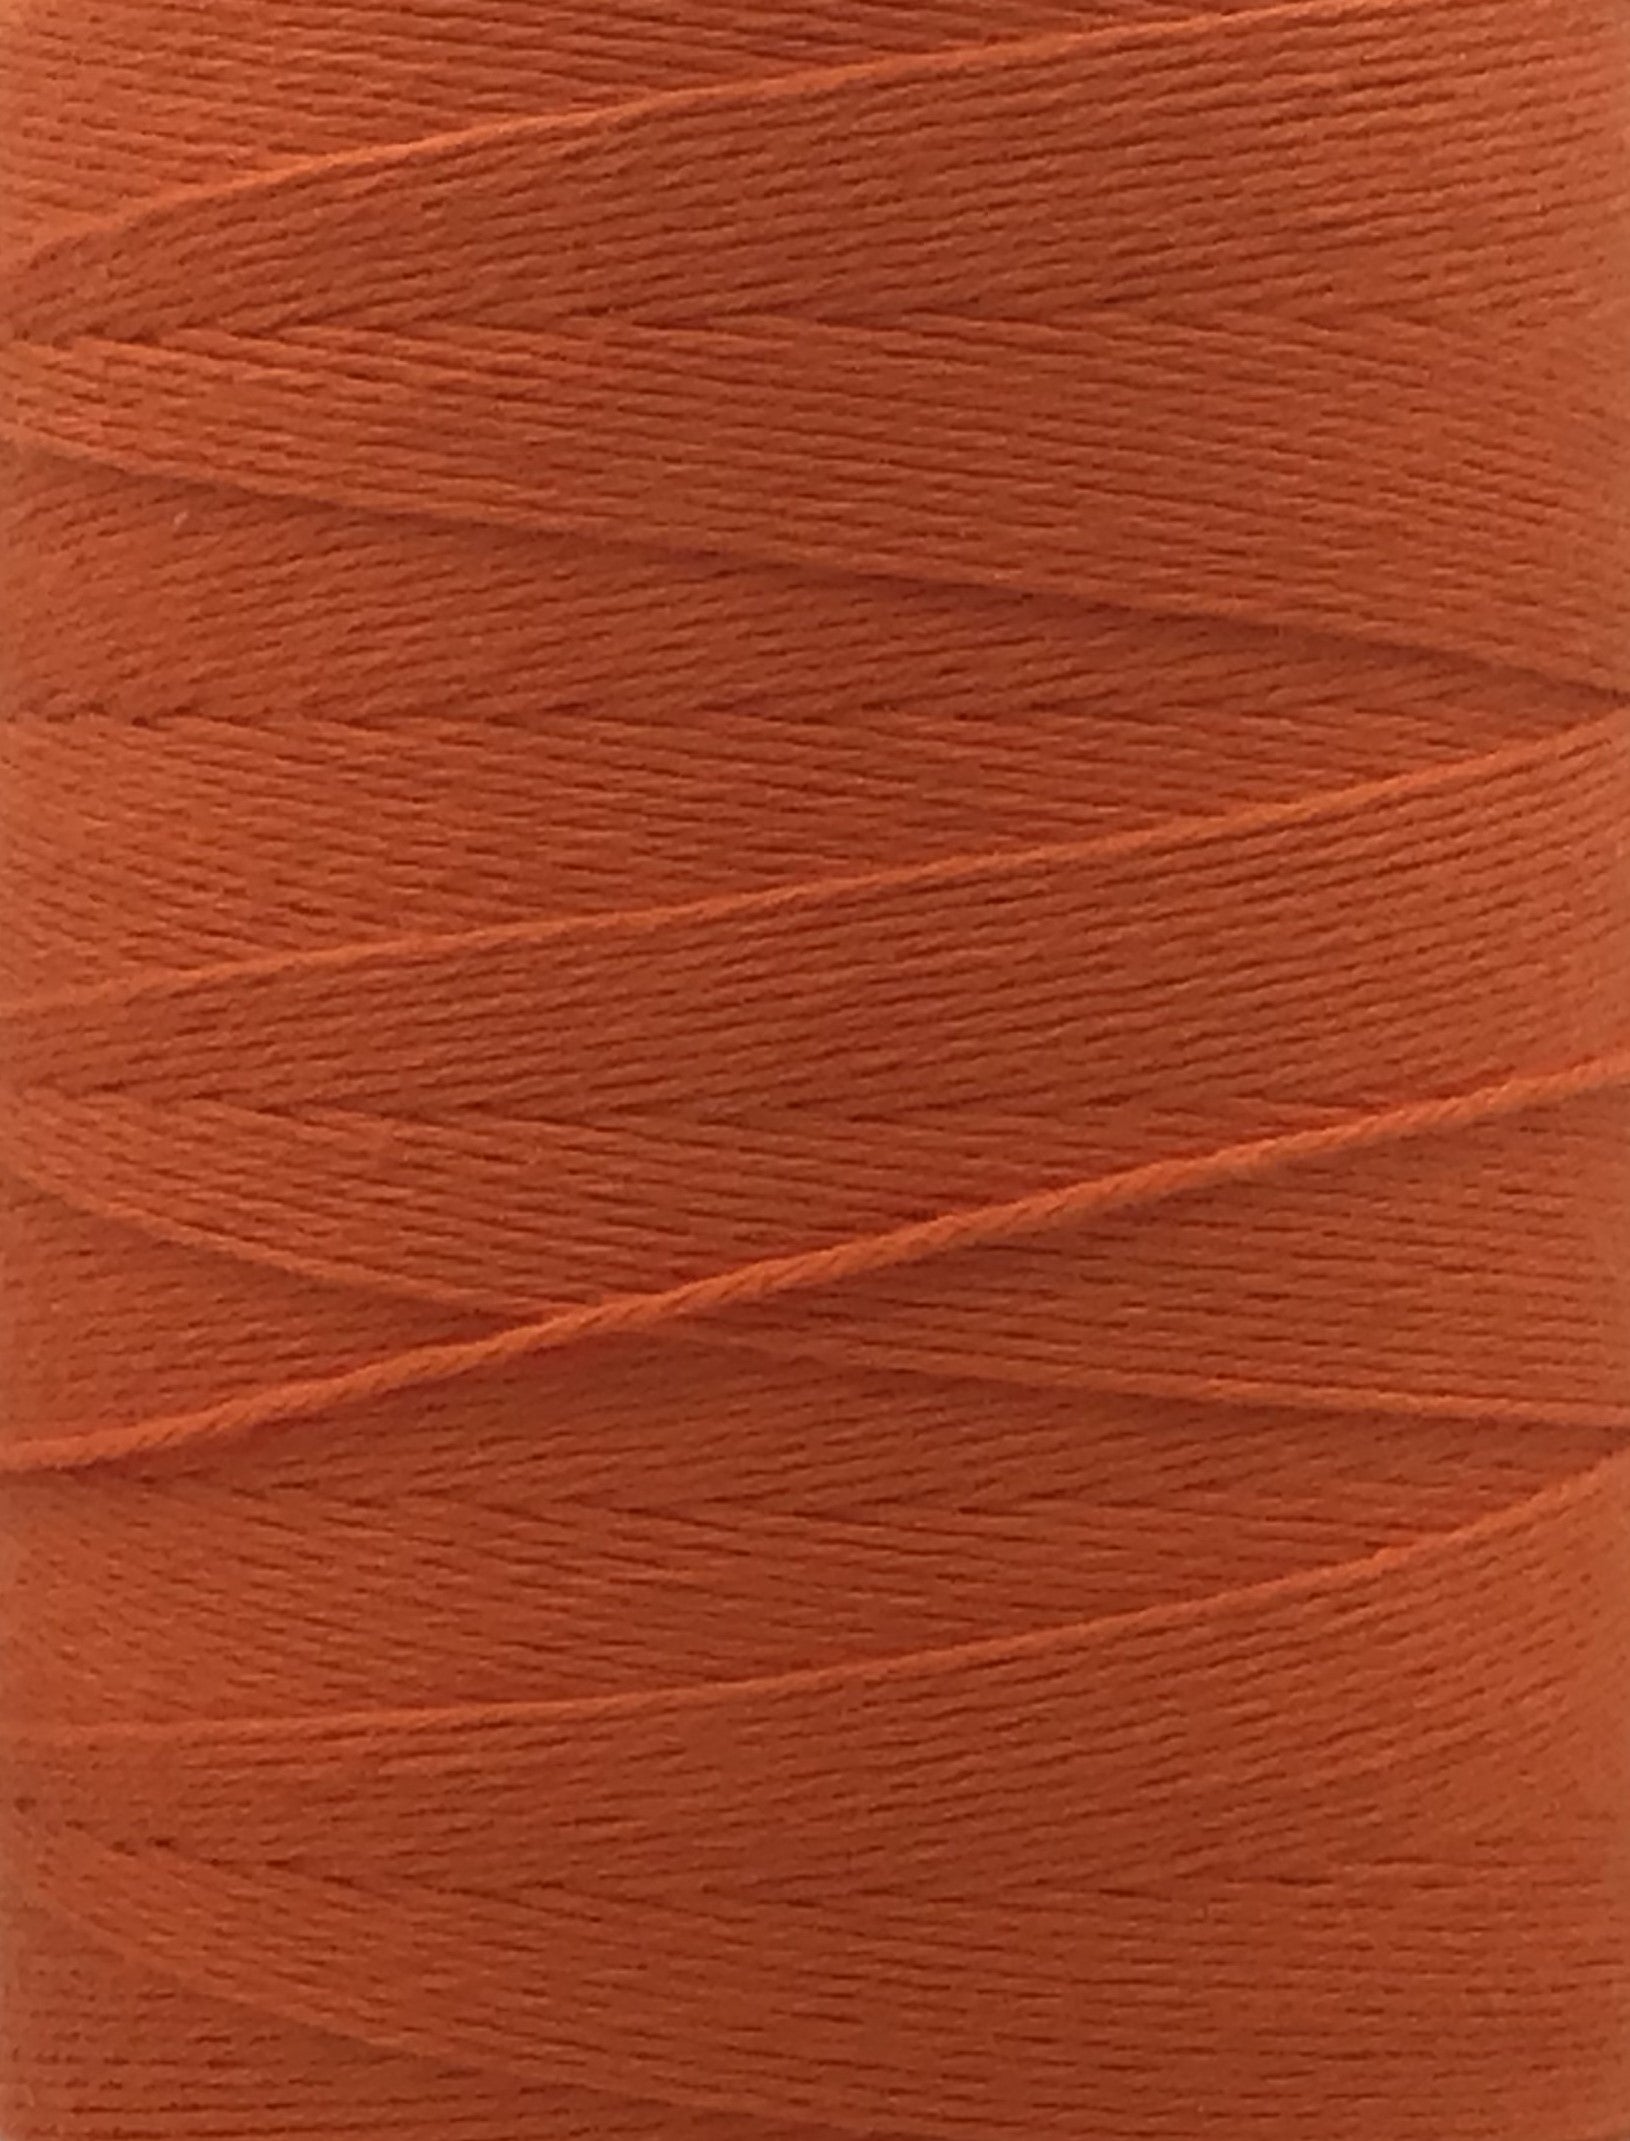 100% coton 4/8 - 100% Cotton Yarn 8/4